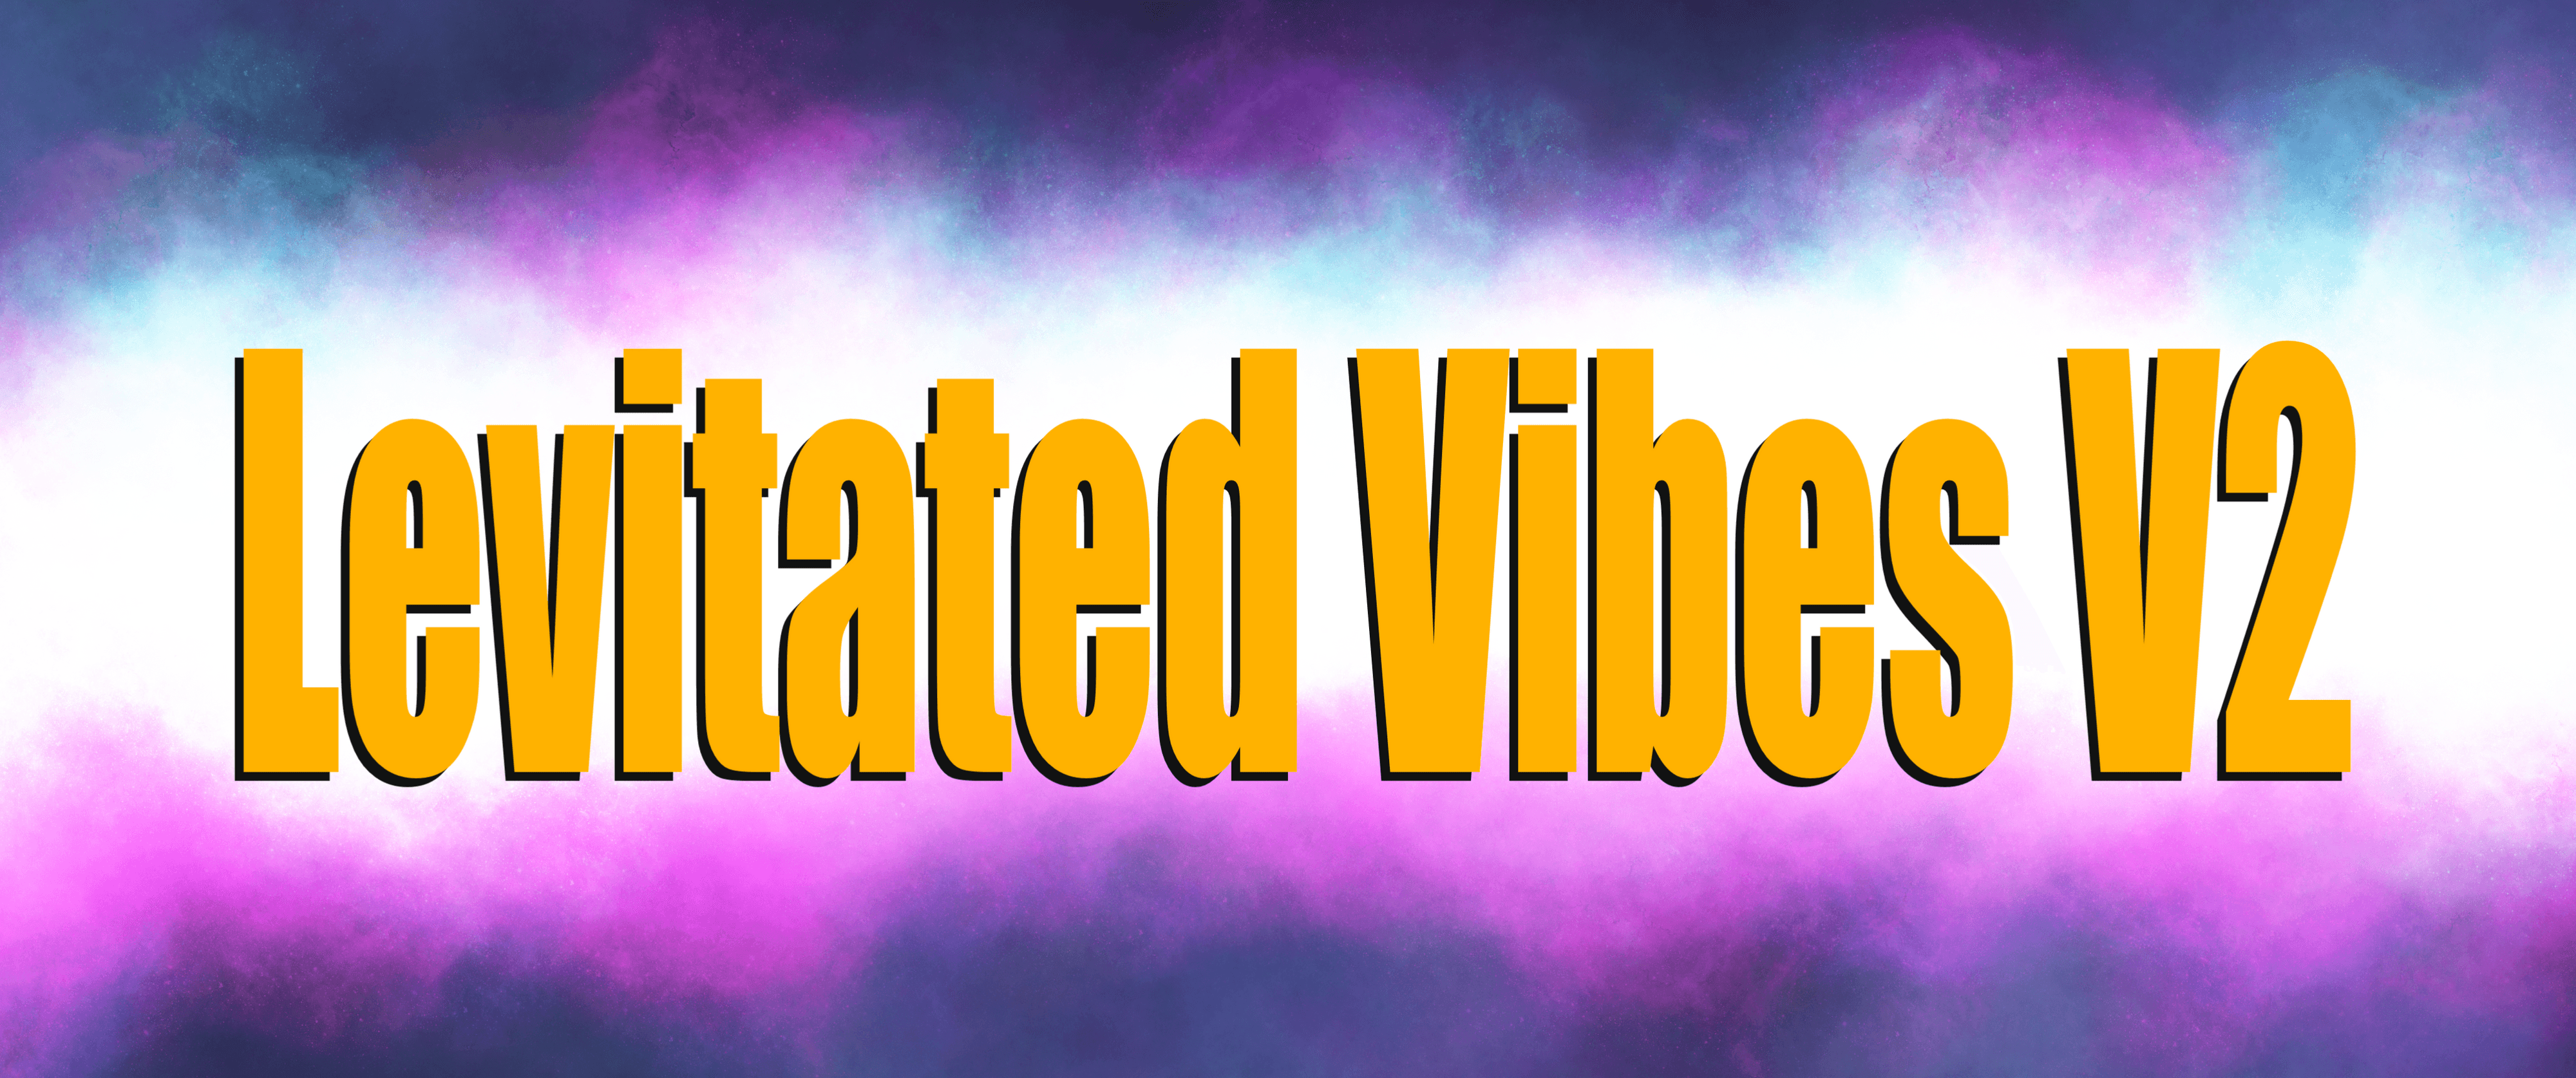 Levitated Vibes V2